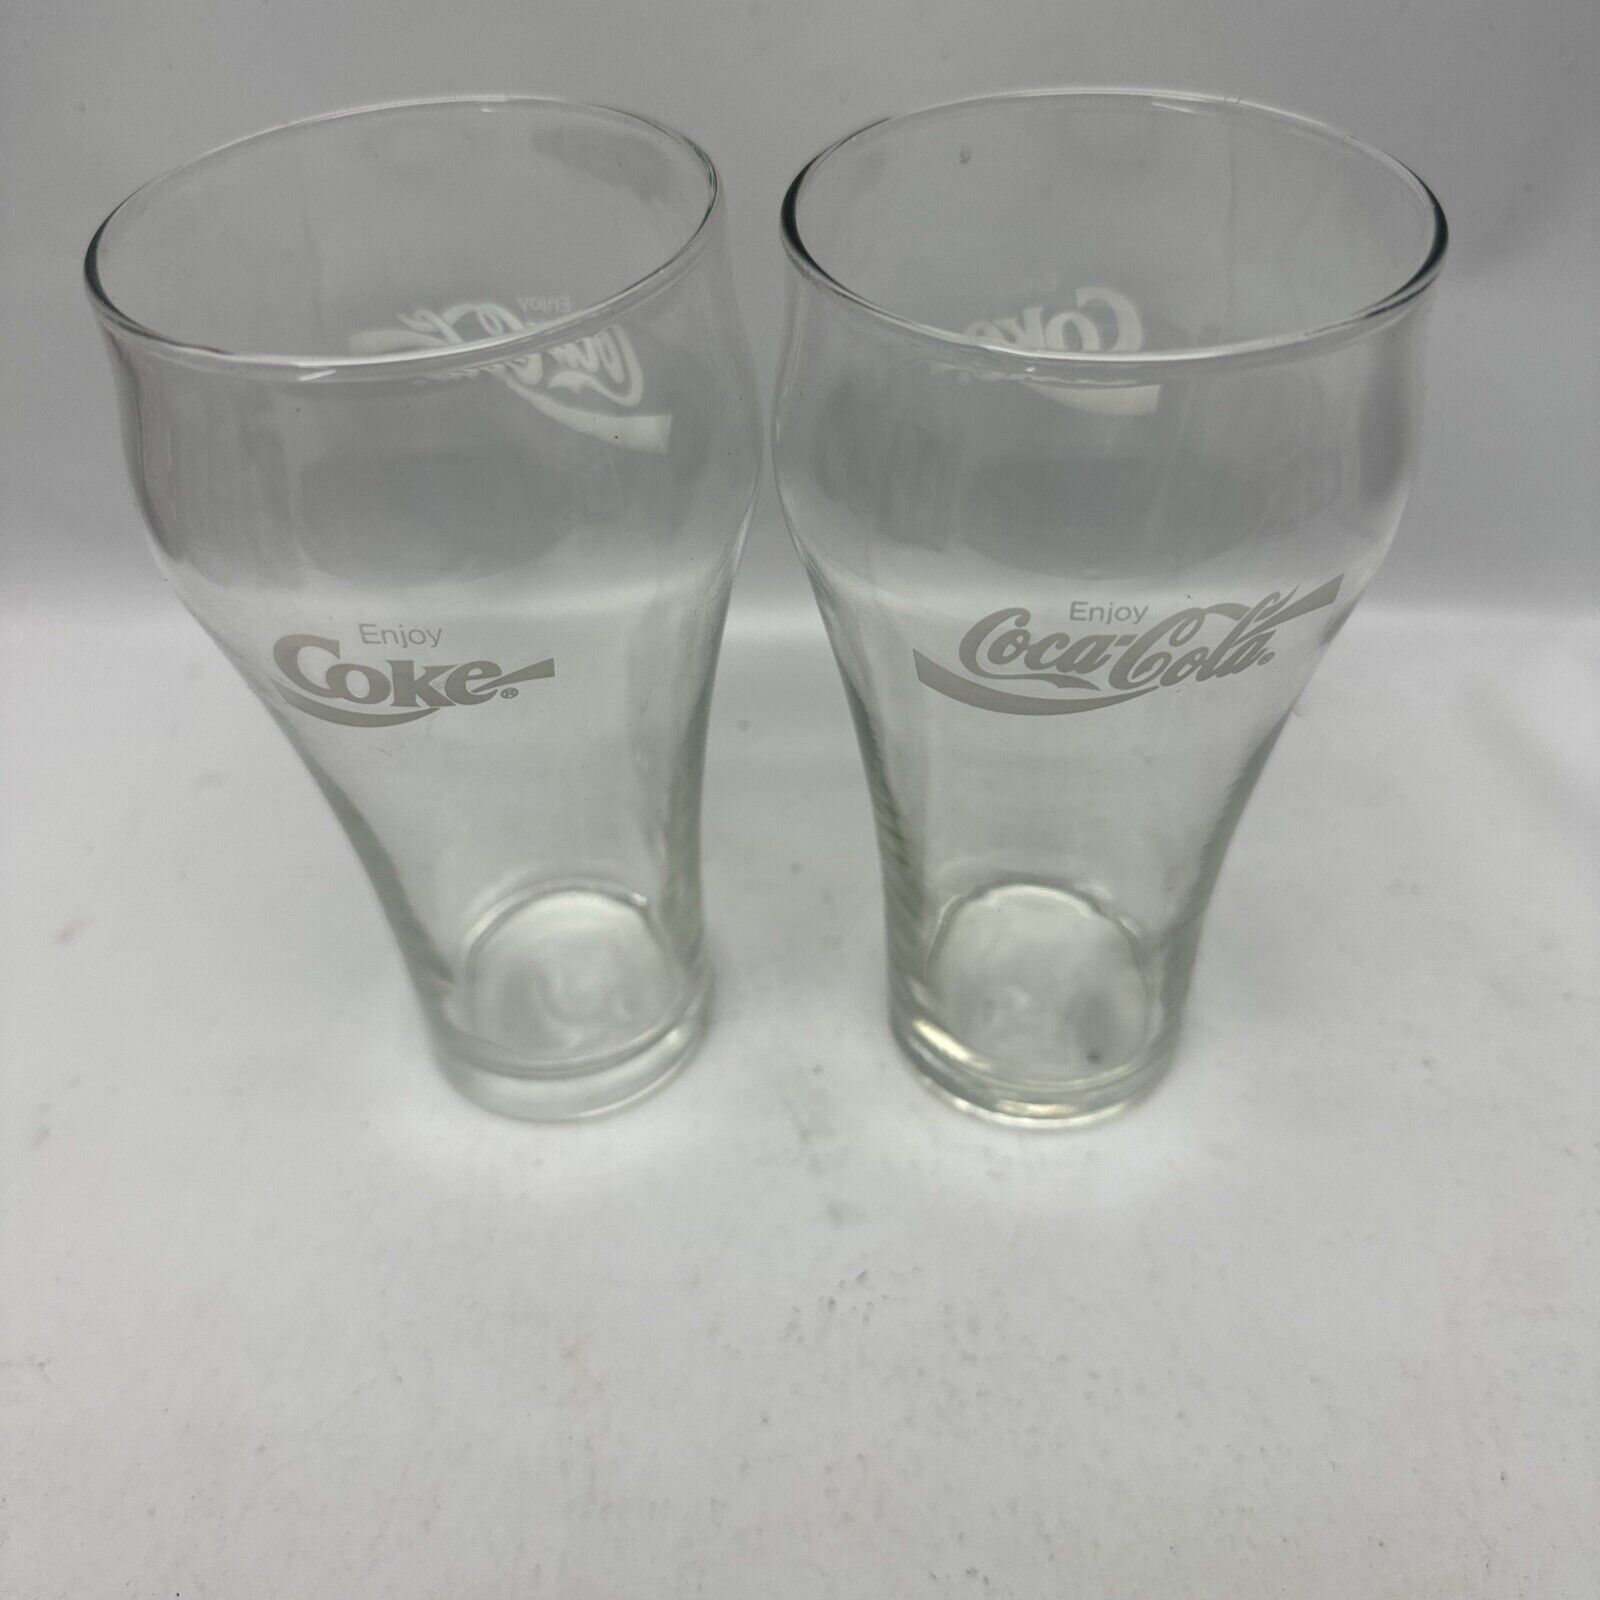 Pair Of Vintage Coca~Cola Drinking Glasses Enjoy Coke